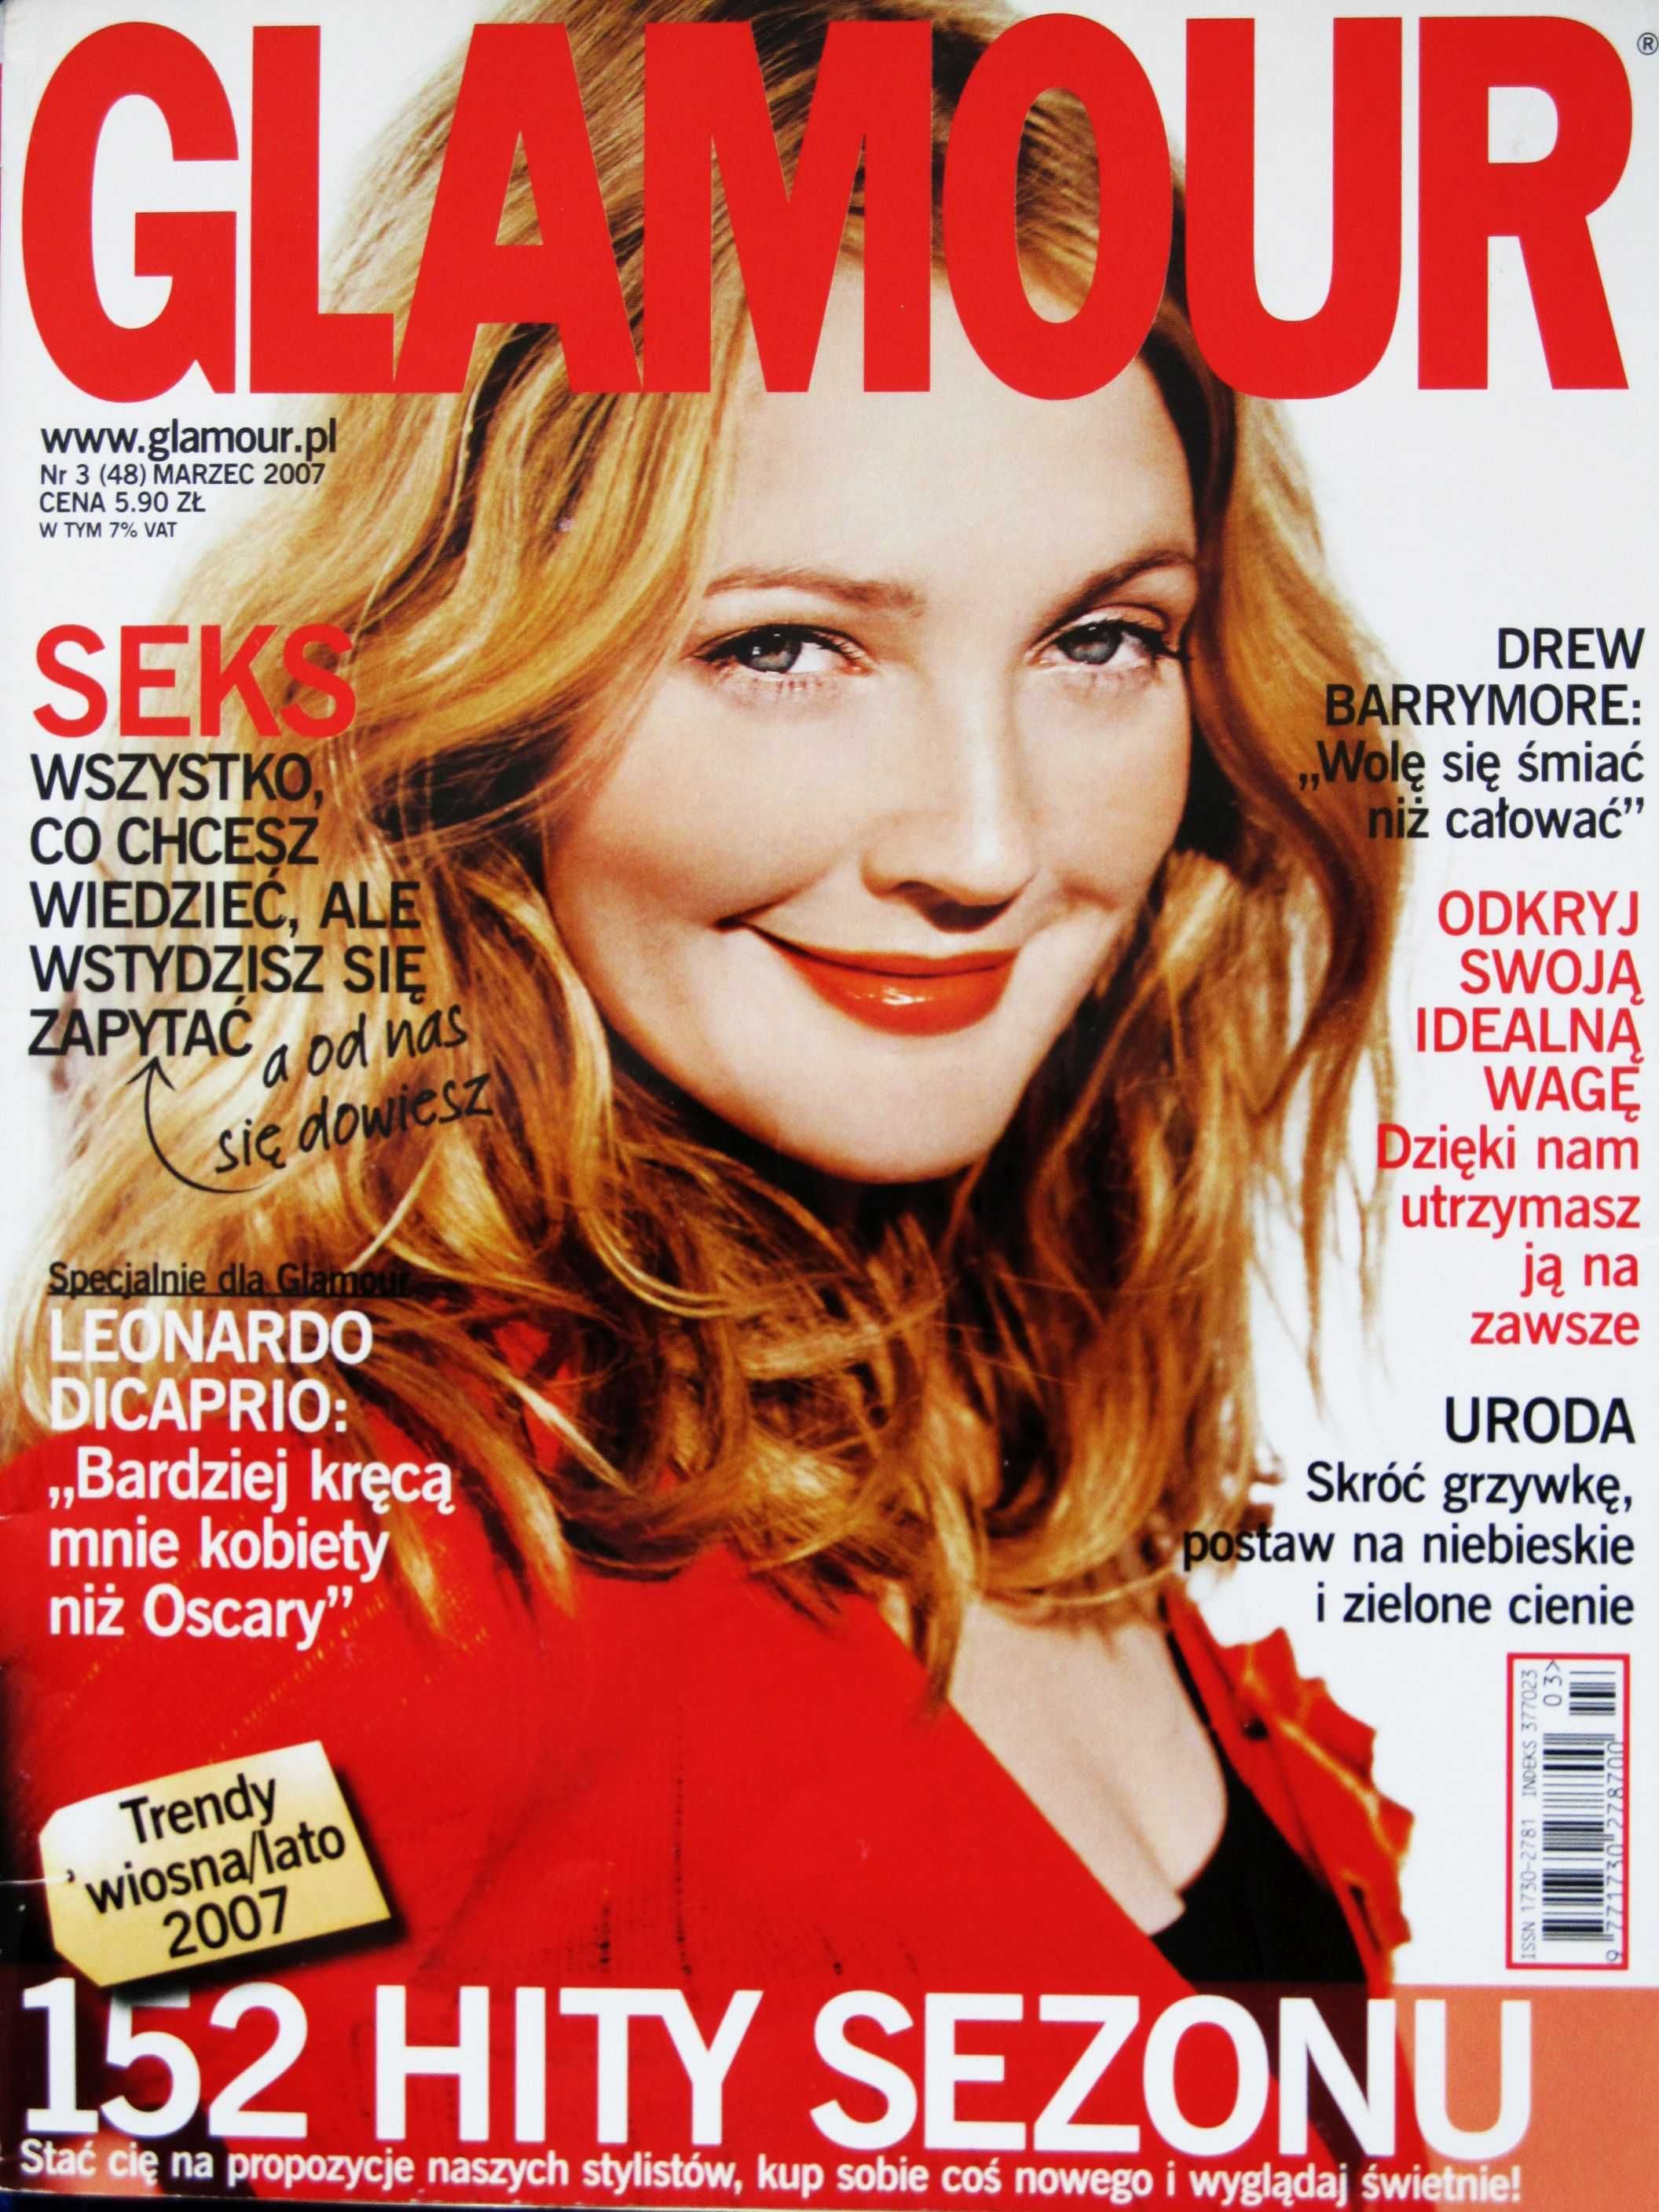 Glamour 3/2007 Drew Barrymore